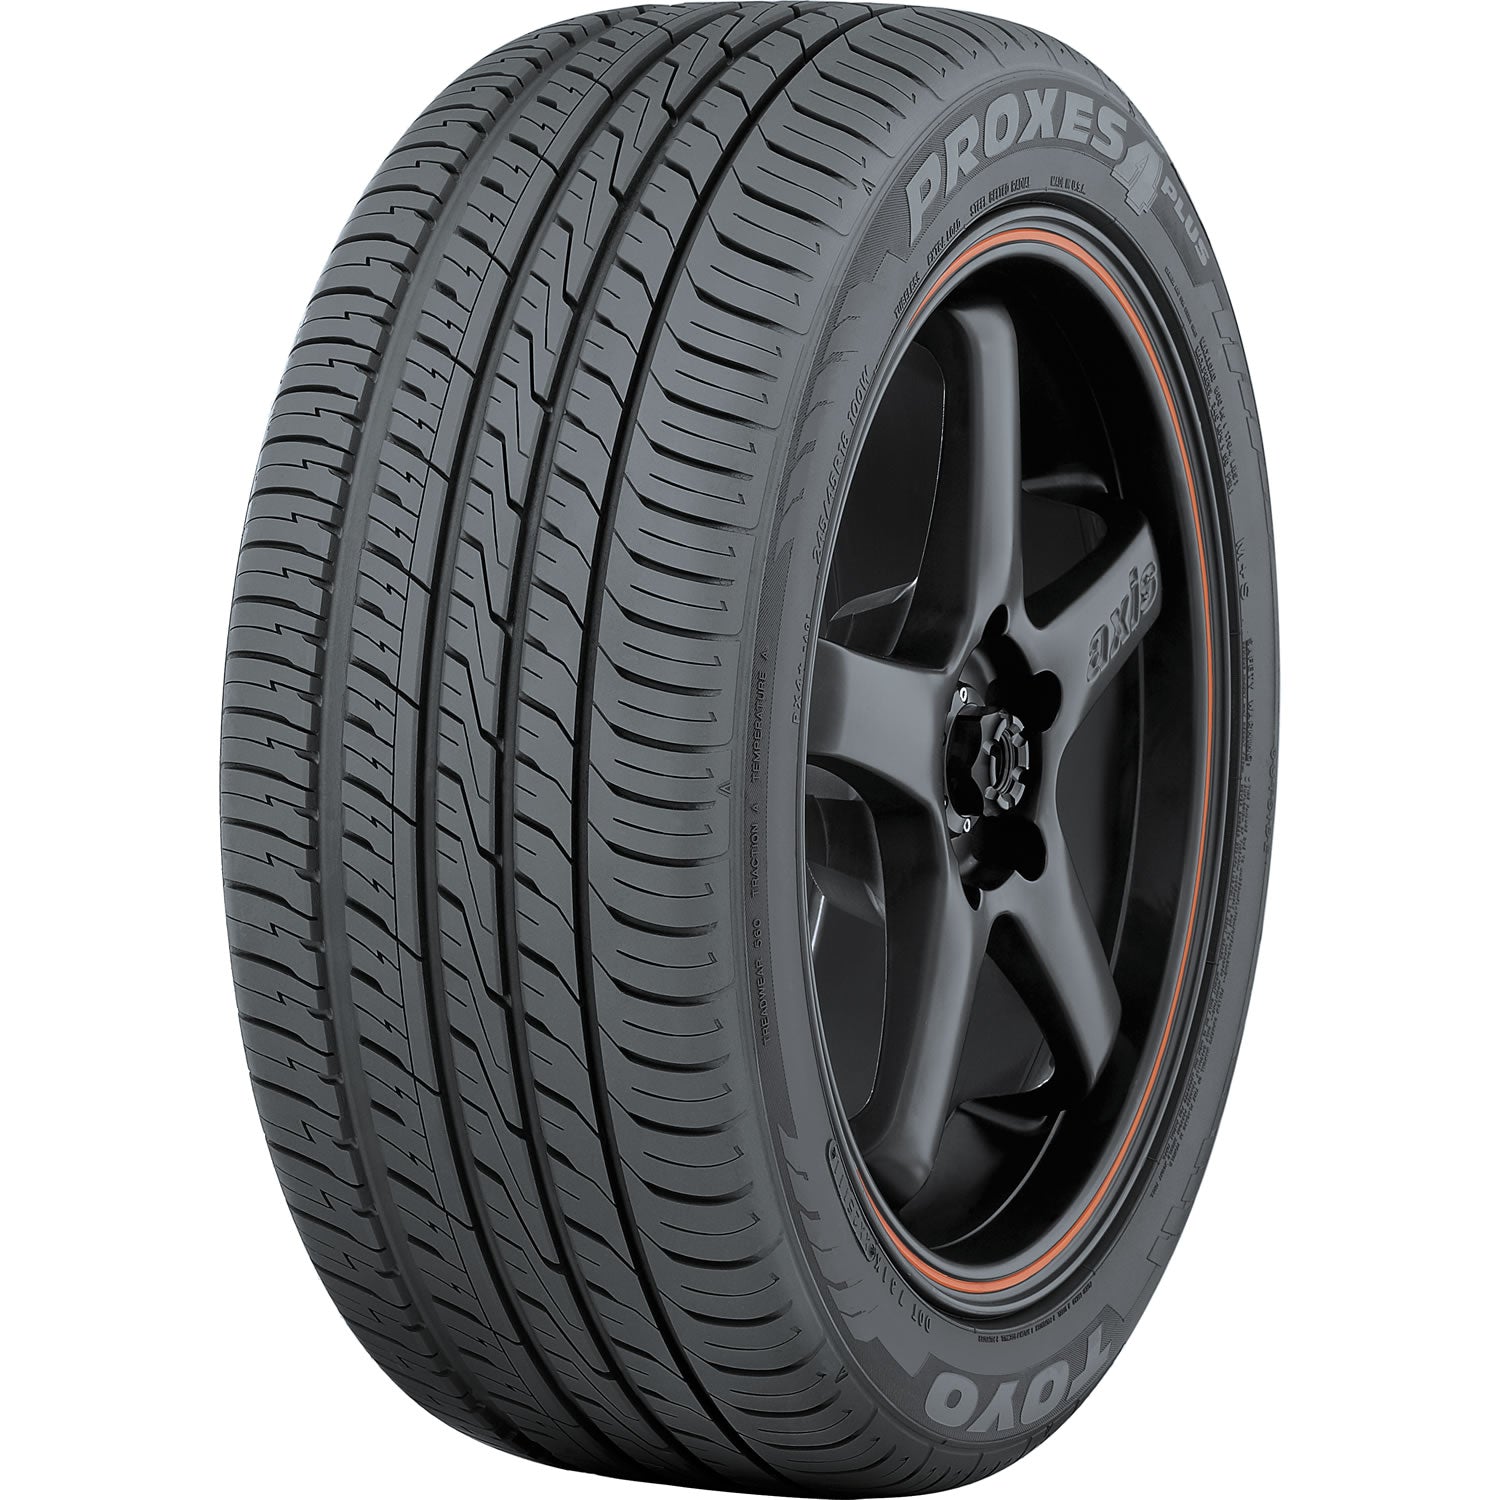 TOYO TIRES PROXES 4 PLUS 205/55R16 (24.8X8.1R 16) Tires